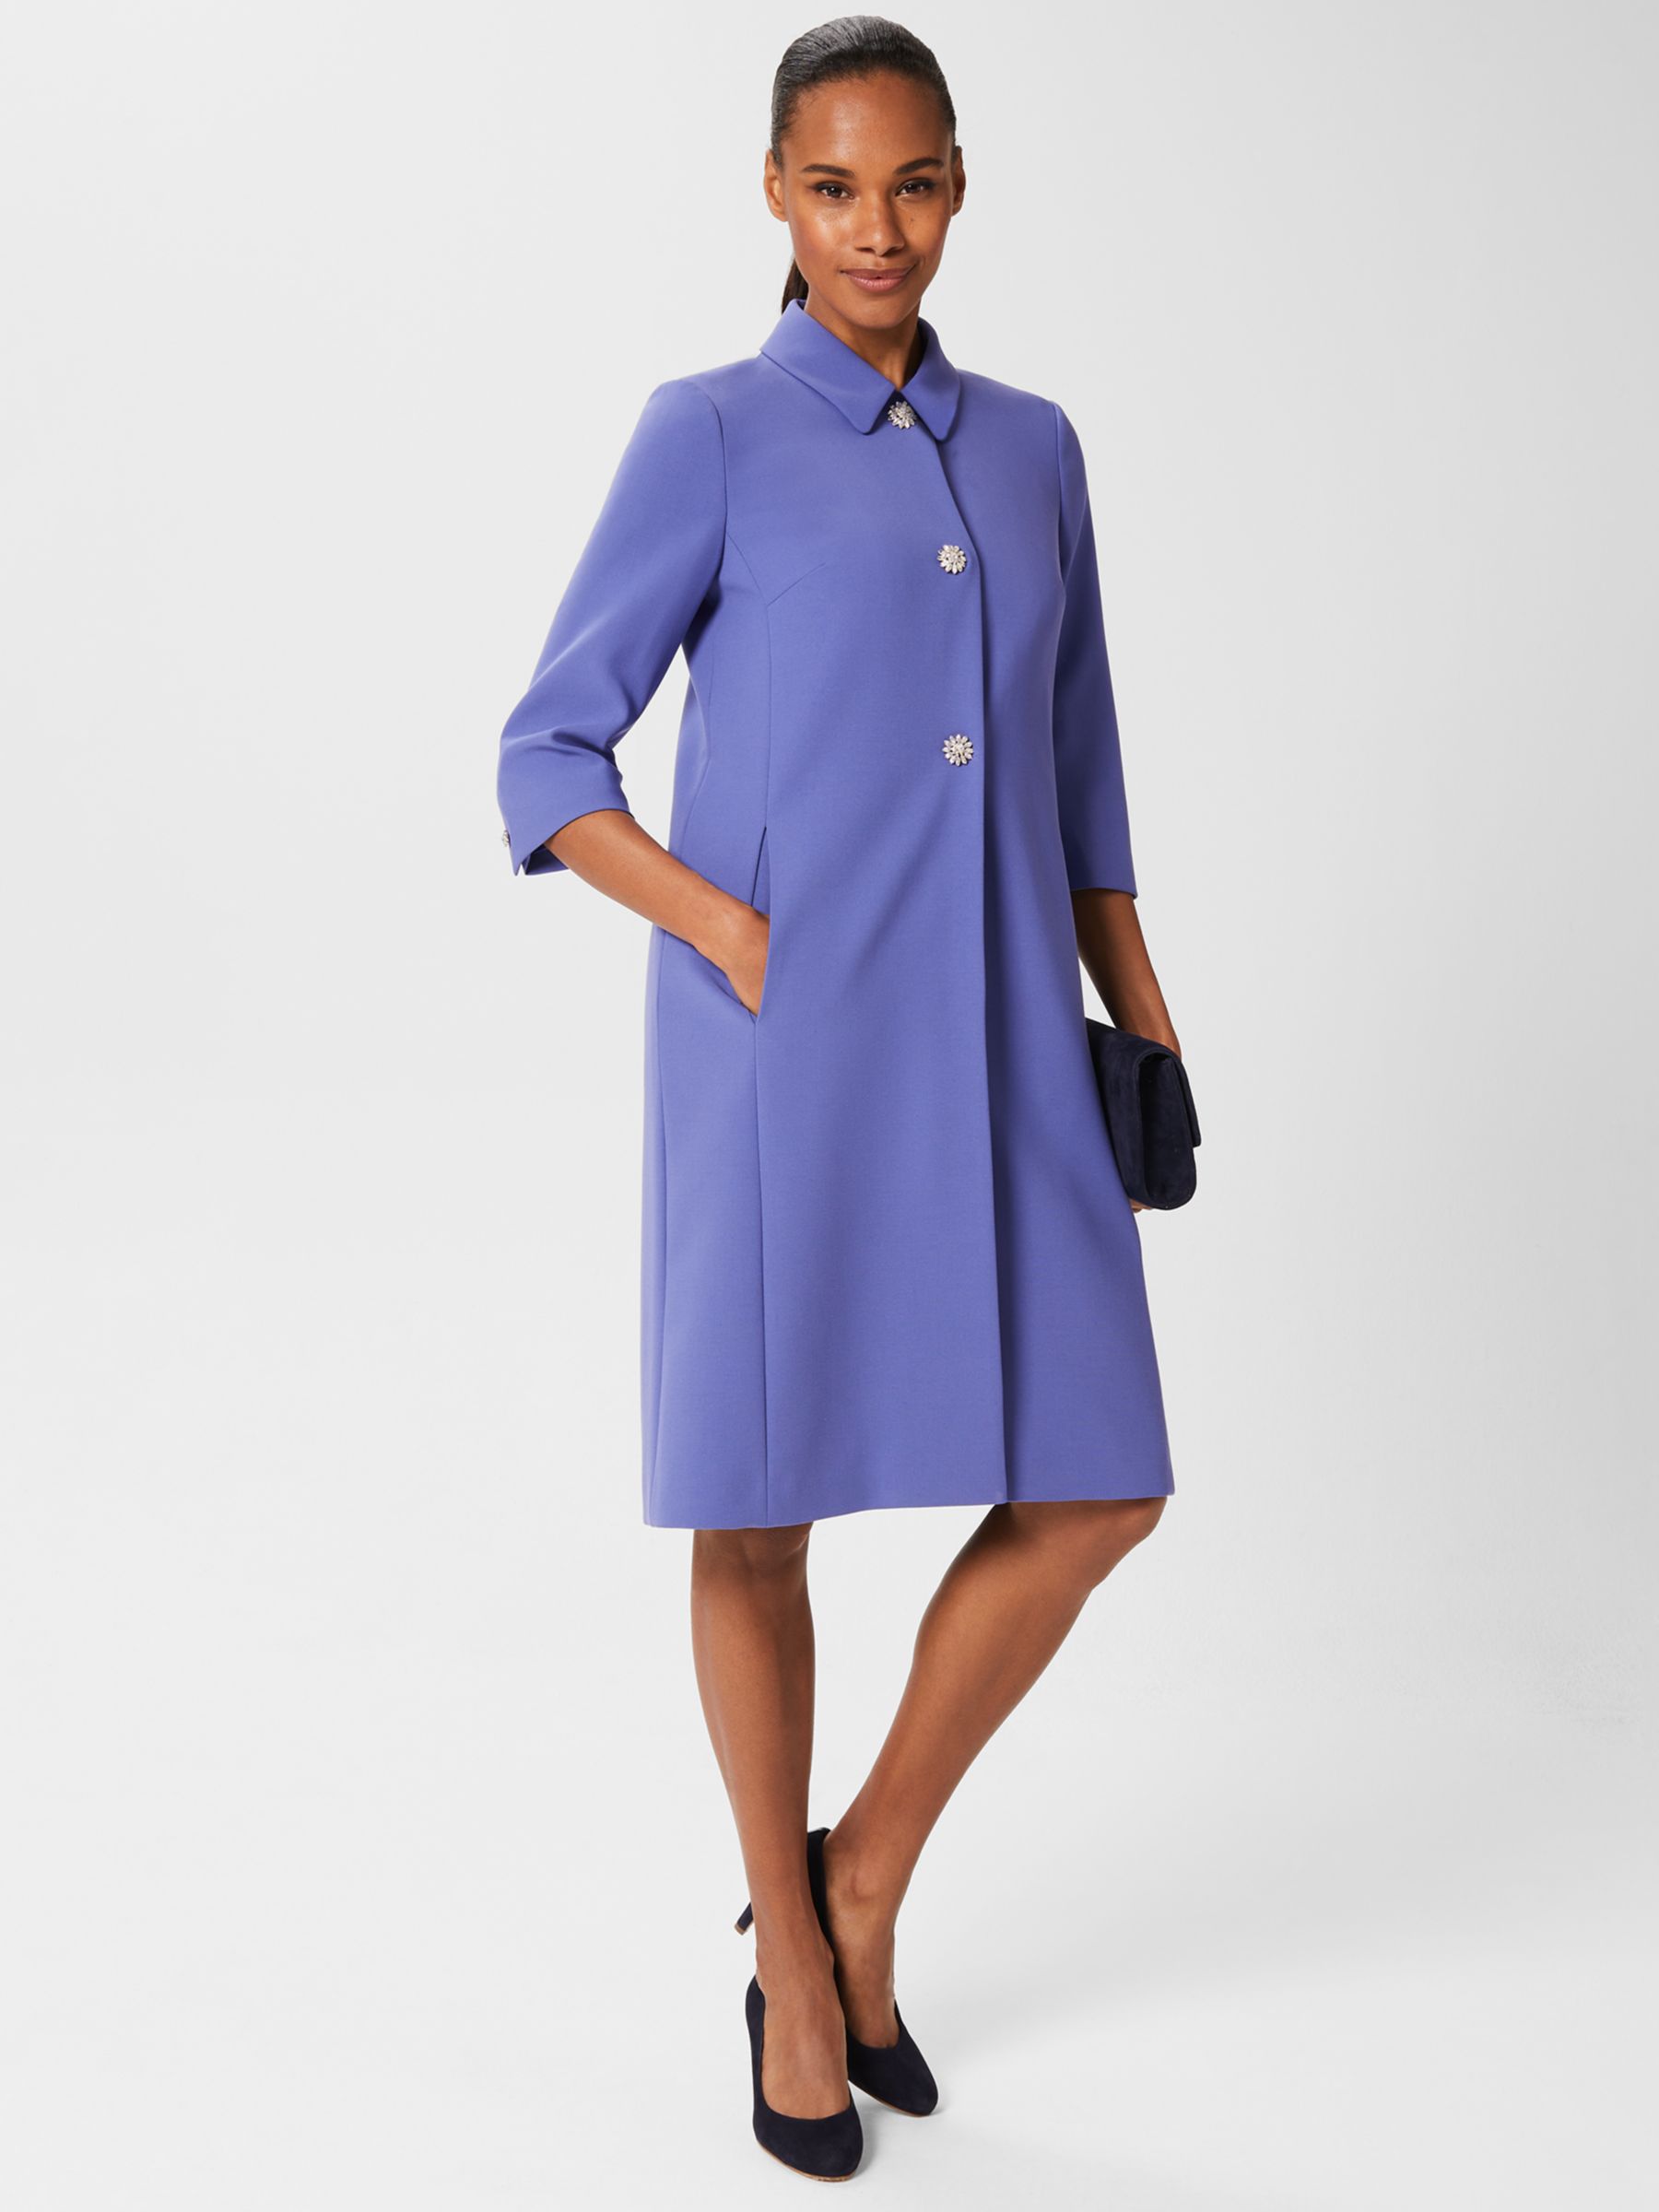 Hobbs Henriella Knee Length Coat, Blue at John Lewis & Partners